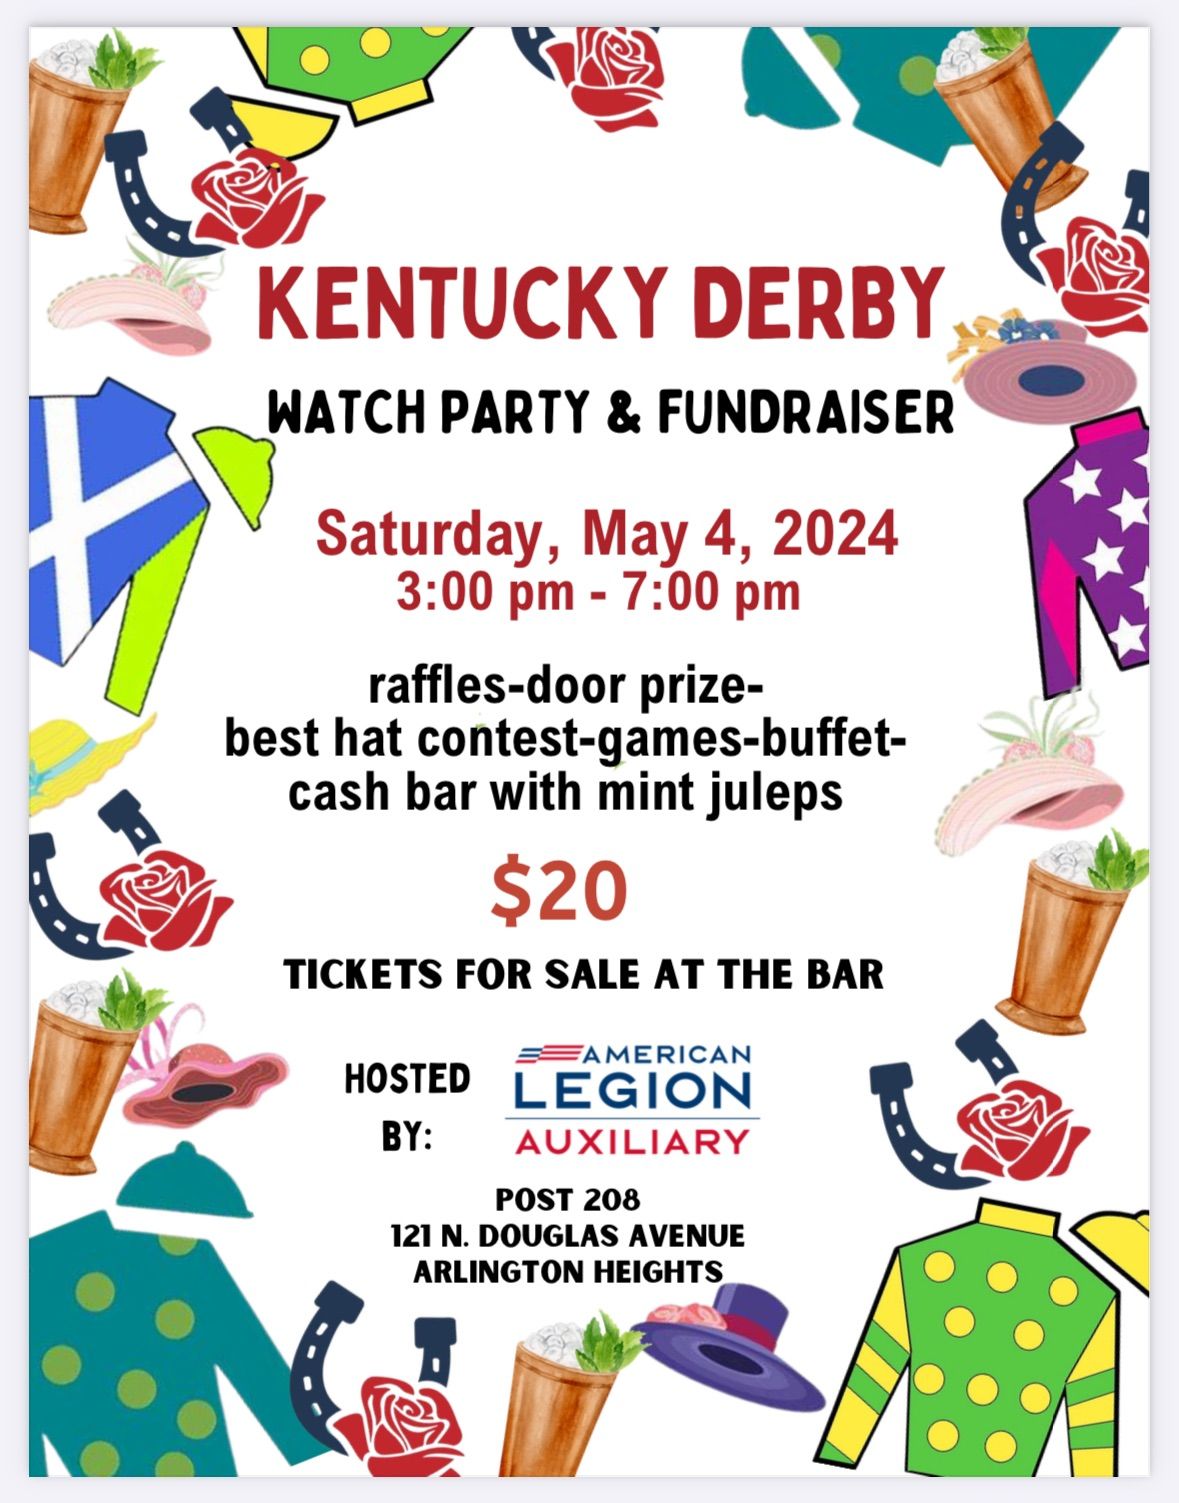 Kentucky Derby Watch Party